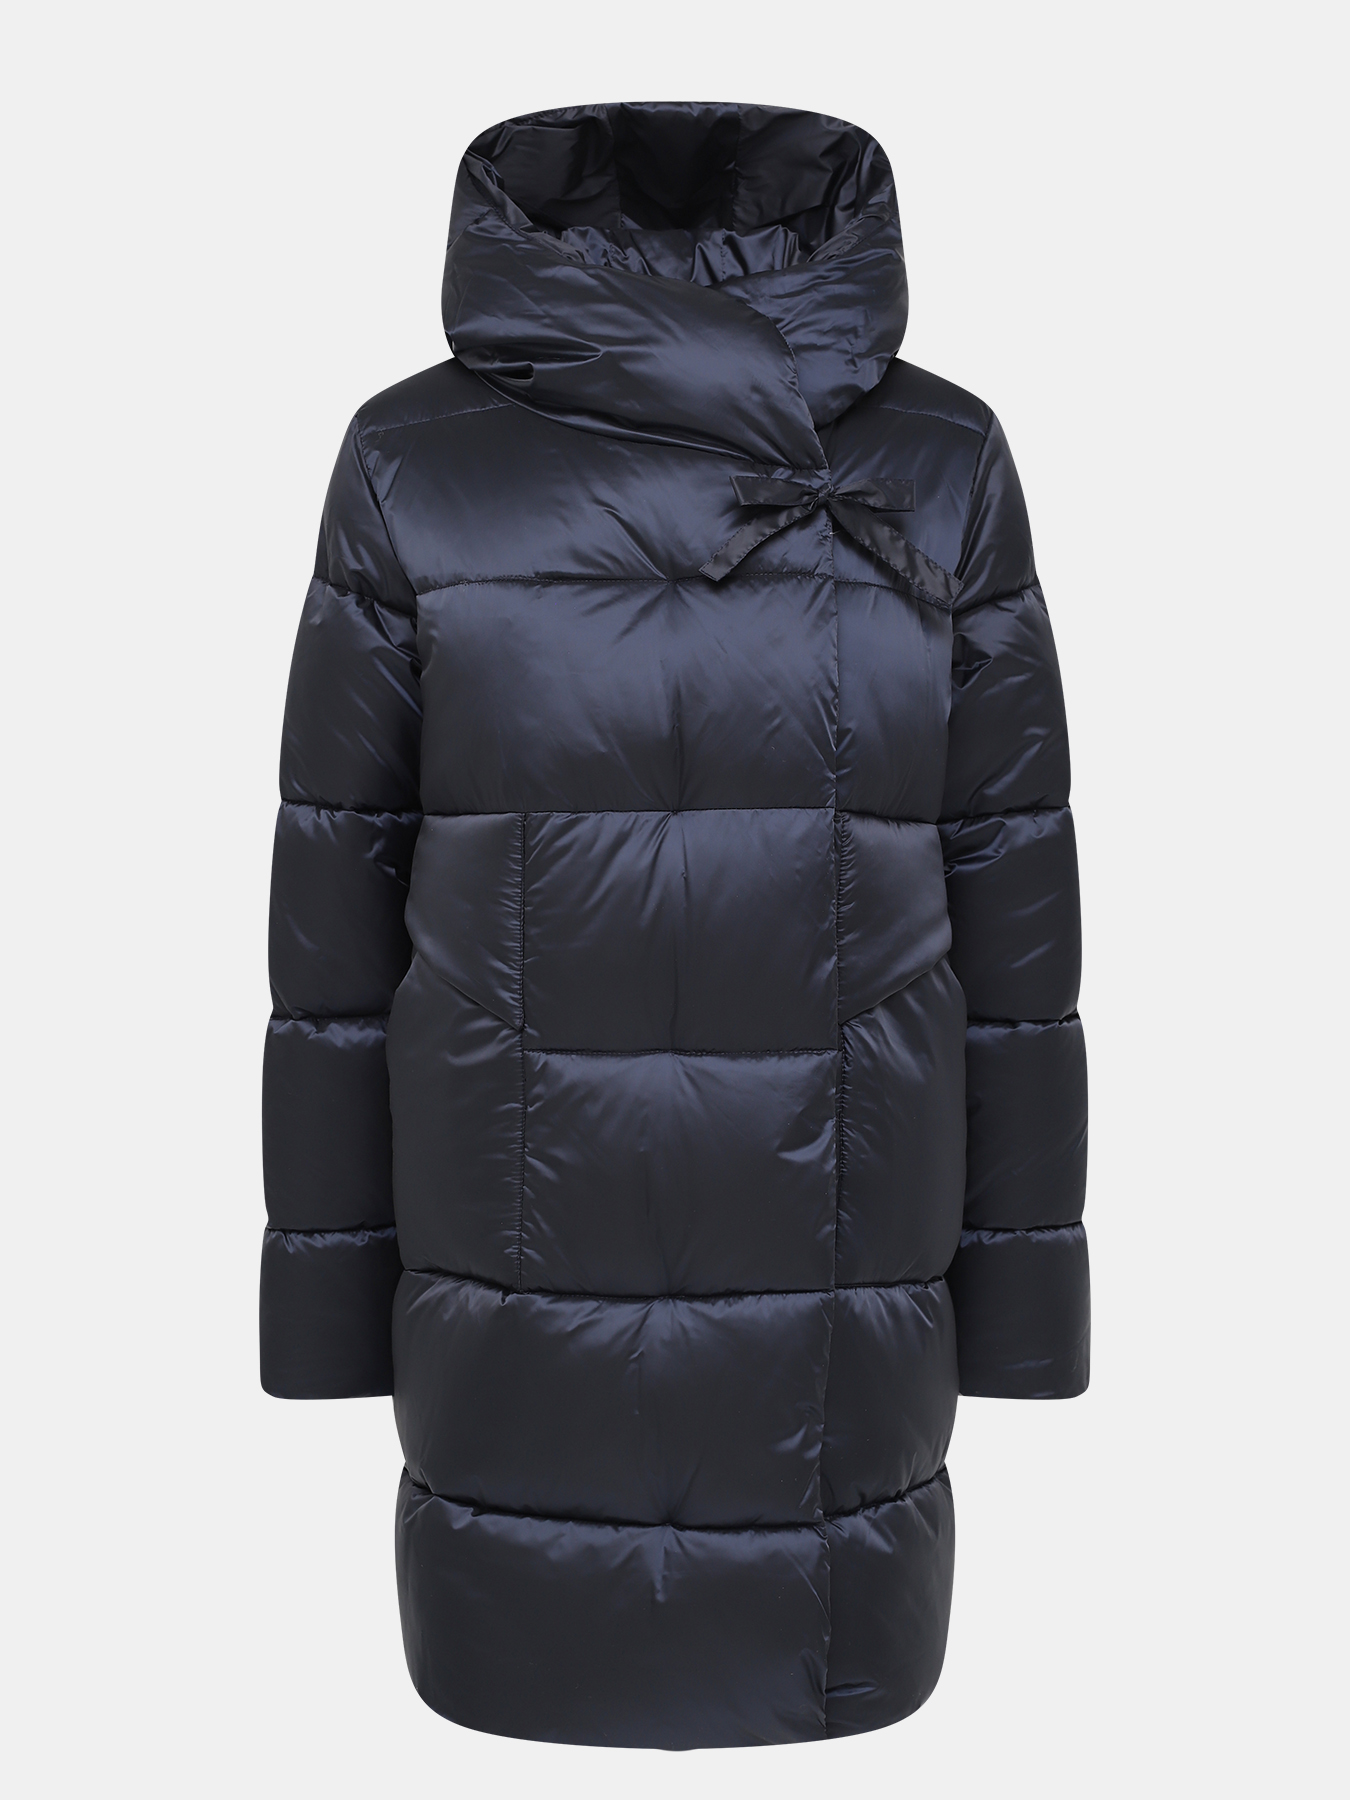 Пальто зимнее Maritta 433530-023, цвет темно-синий, размер 50 - фото 1